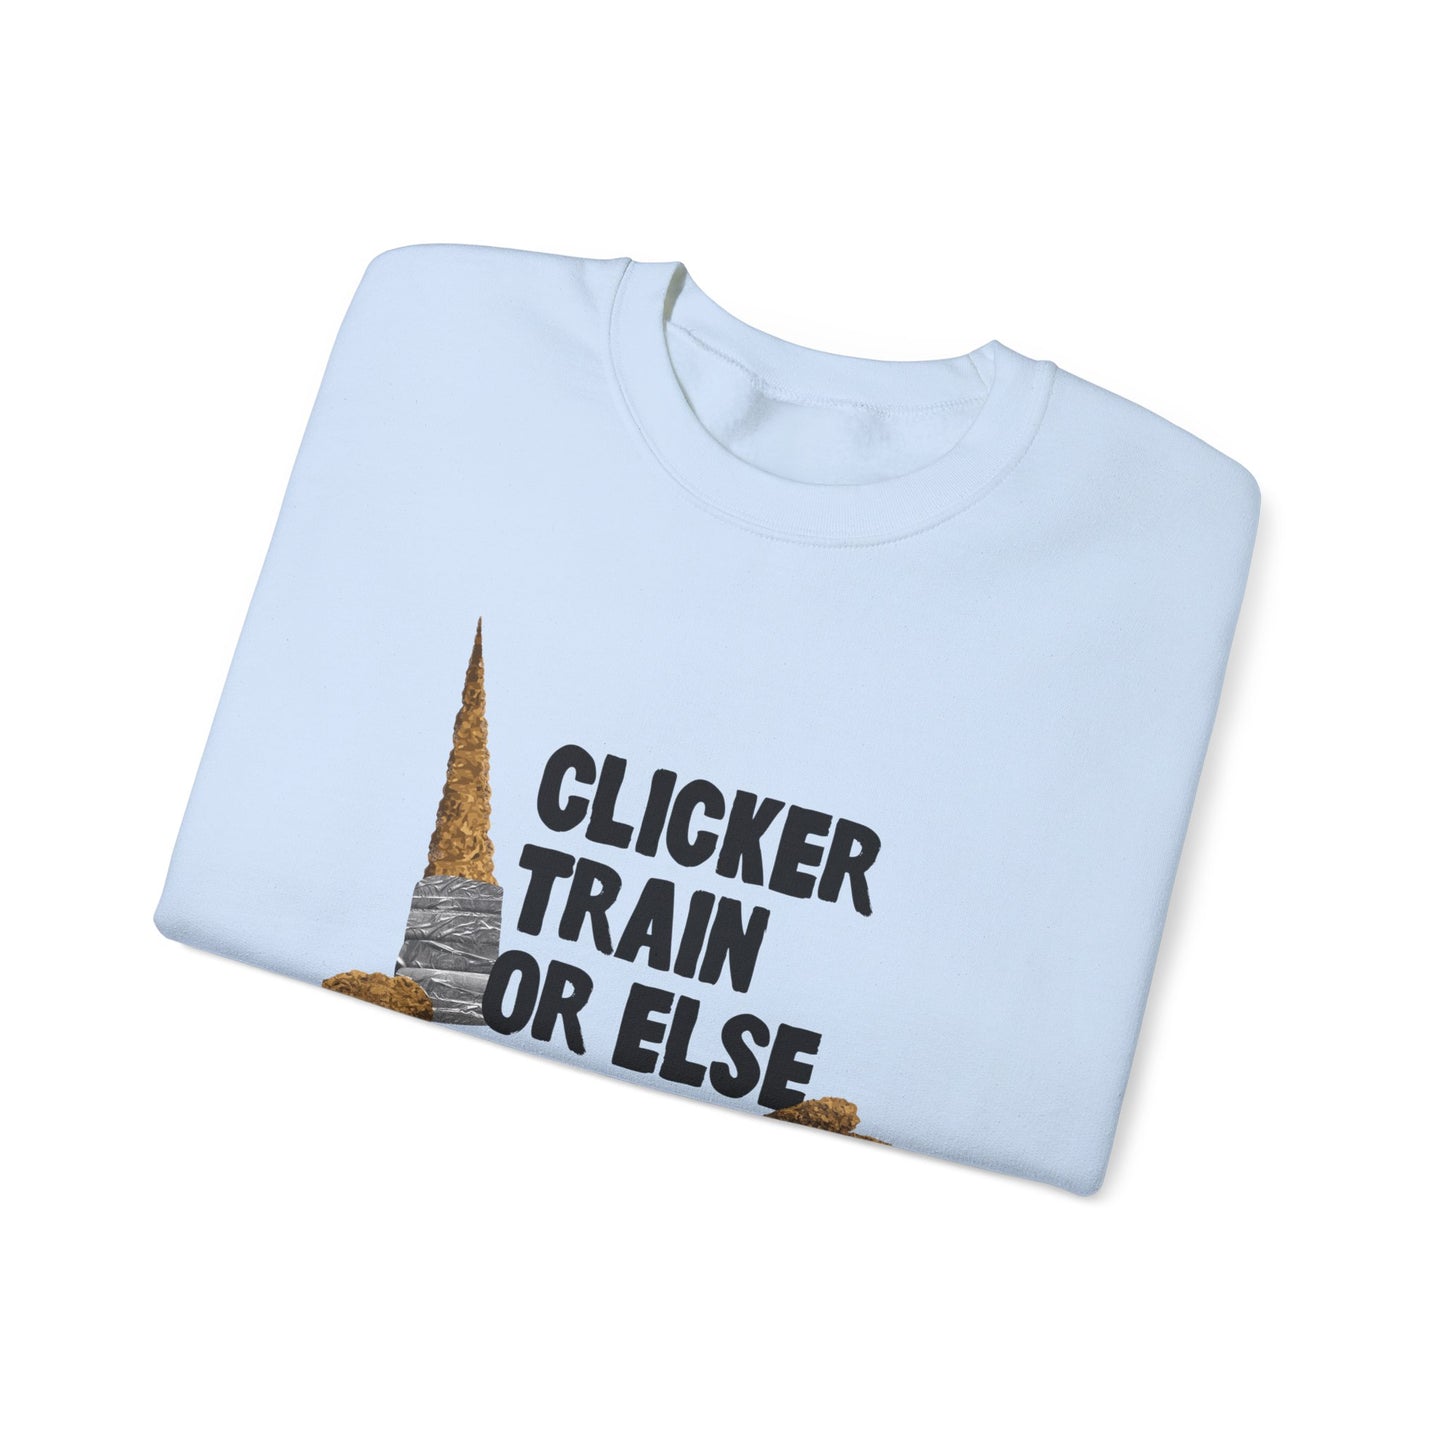 Clicker Train or Else Sweatshirt